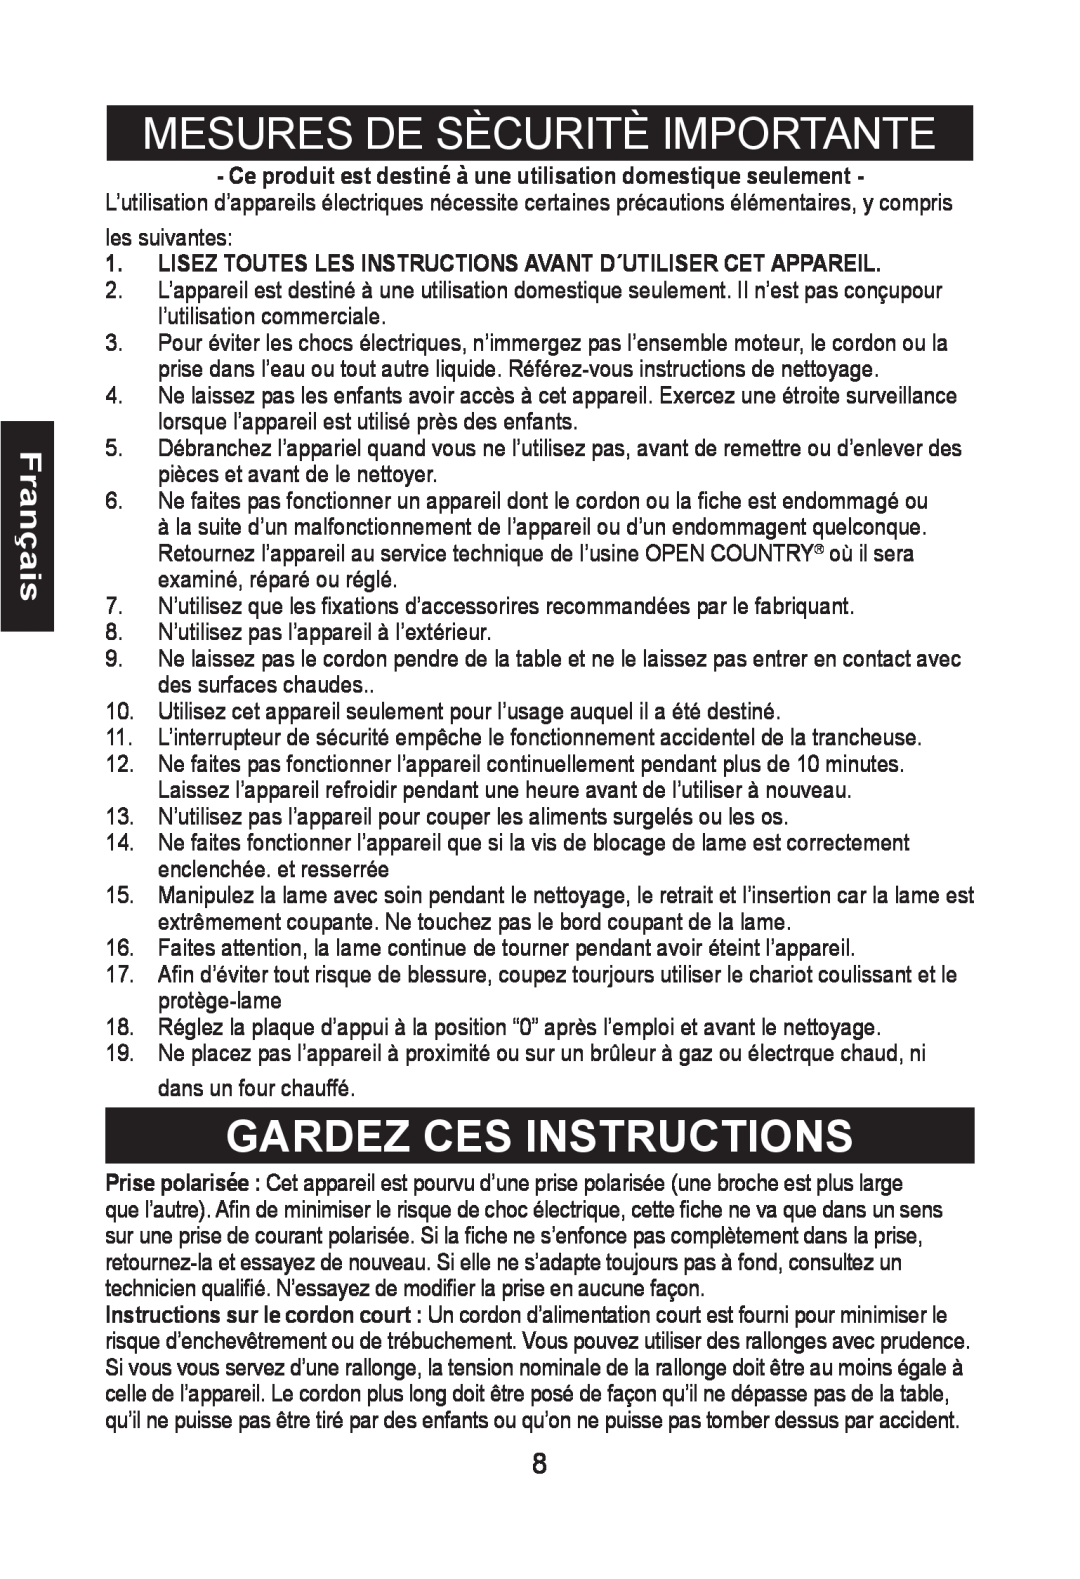 Nesco FS-150PR manual Gardez Ces Instructions, Mesures De Sècuritè Importante, Français 